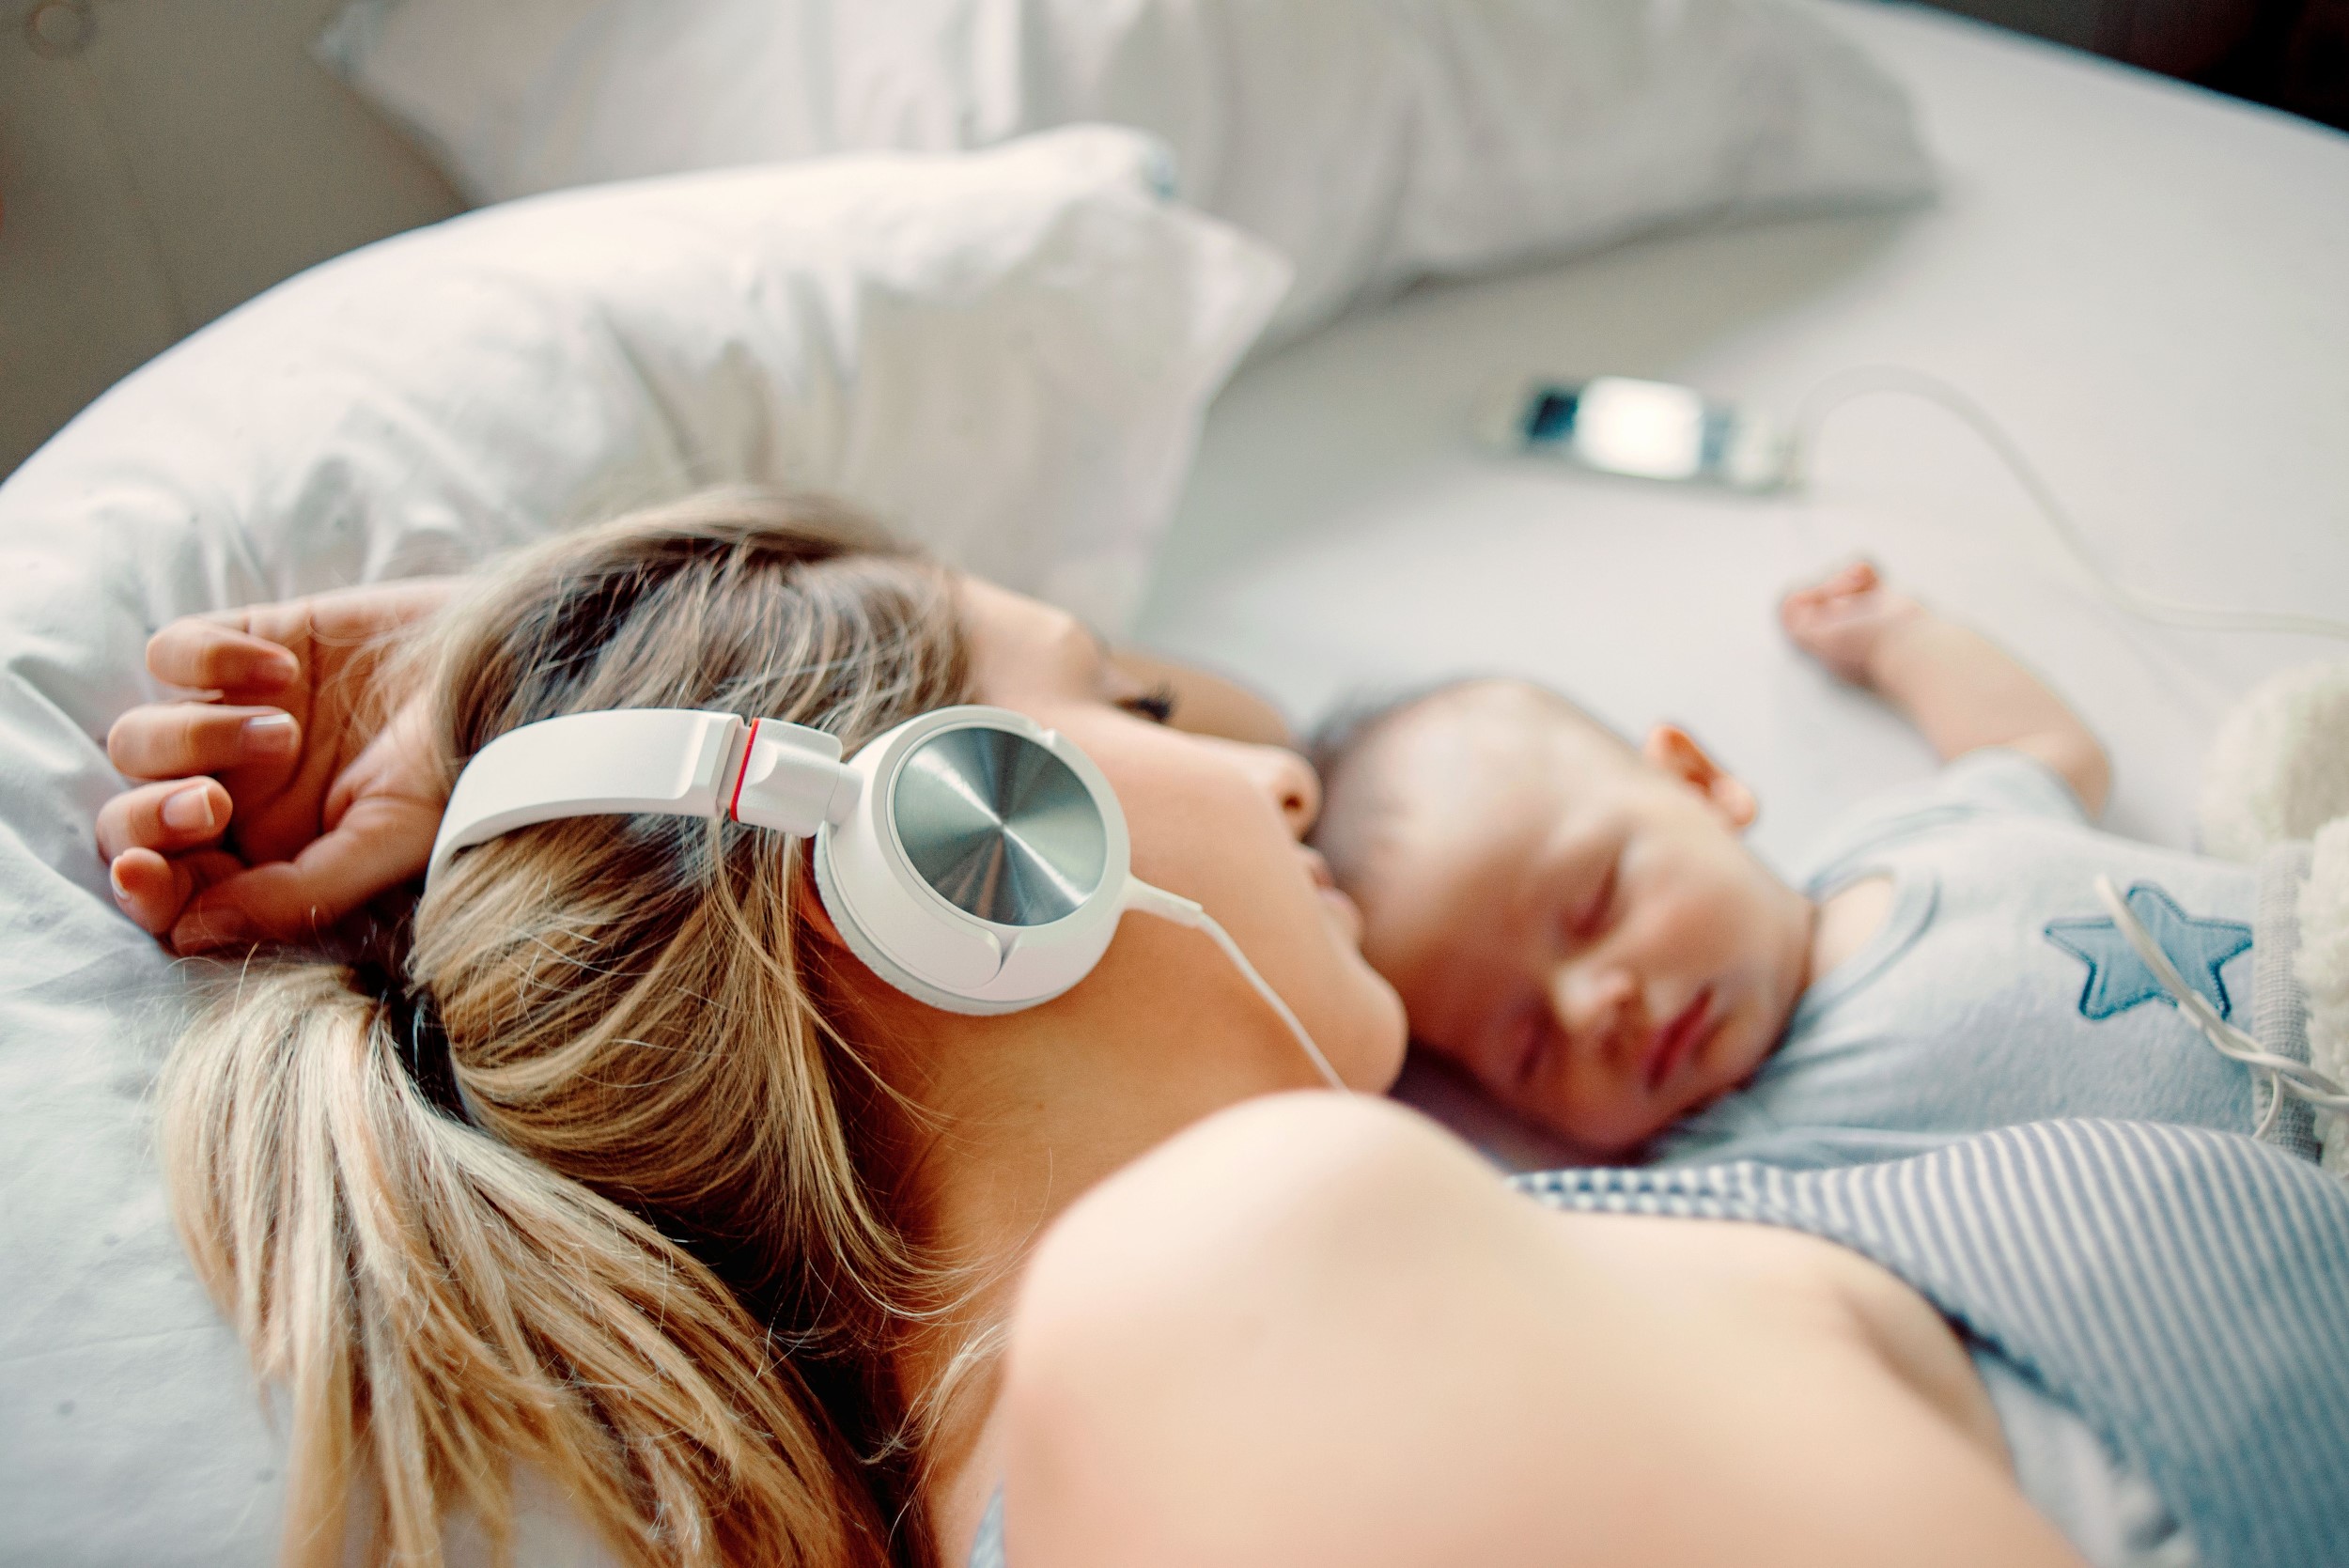 Woman lying next to hear newborn, listening to a postpartum affirmations MP3